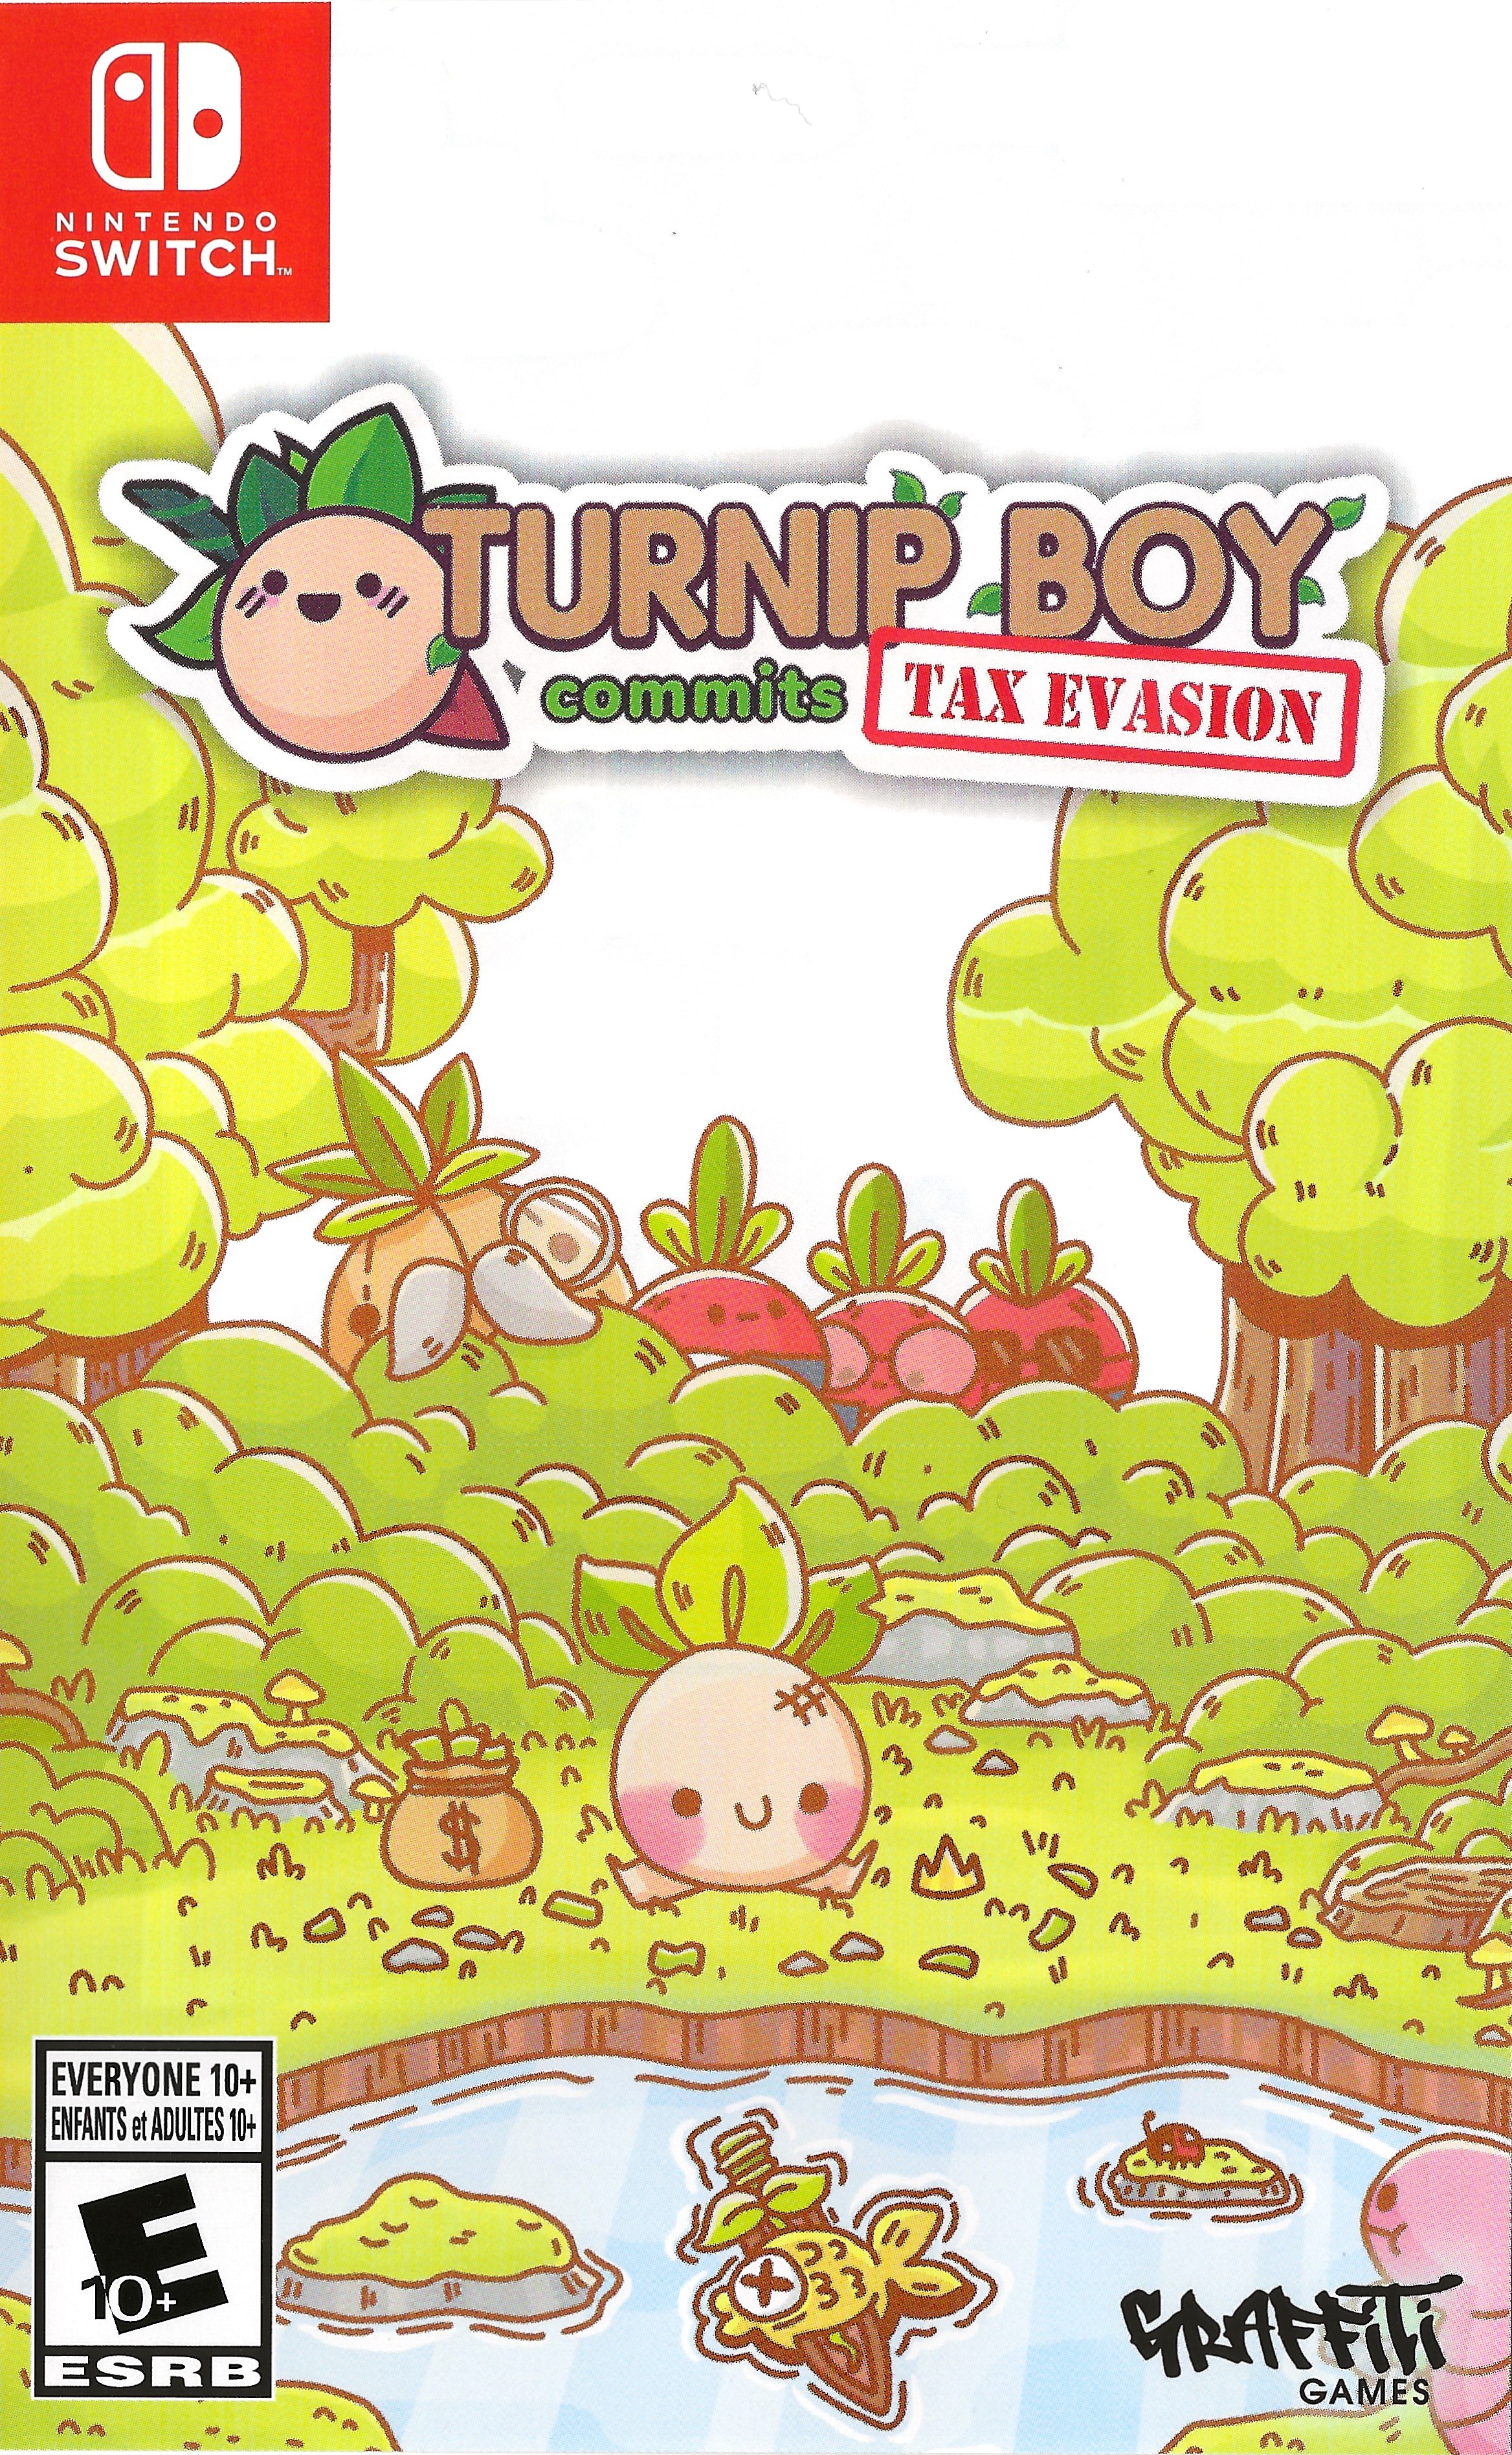 'Turnip Boy: commits Tax Evasion'